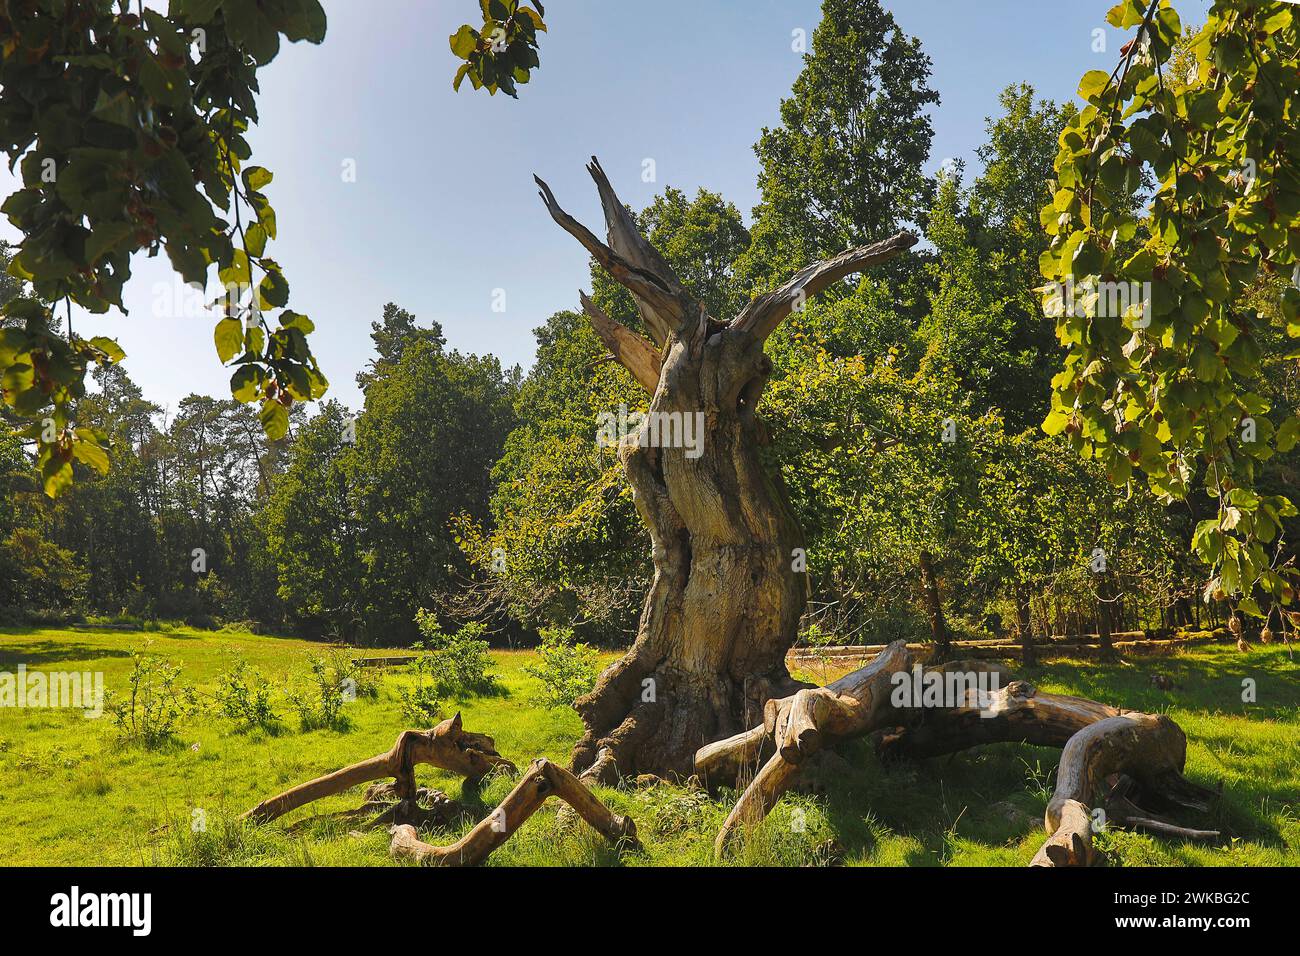 common beech (Fagus sylvatica), dead tree in Hutewald Halloh, Germany, Hesse, Kellerwald National Park, Albertshausen Stock Photo